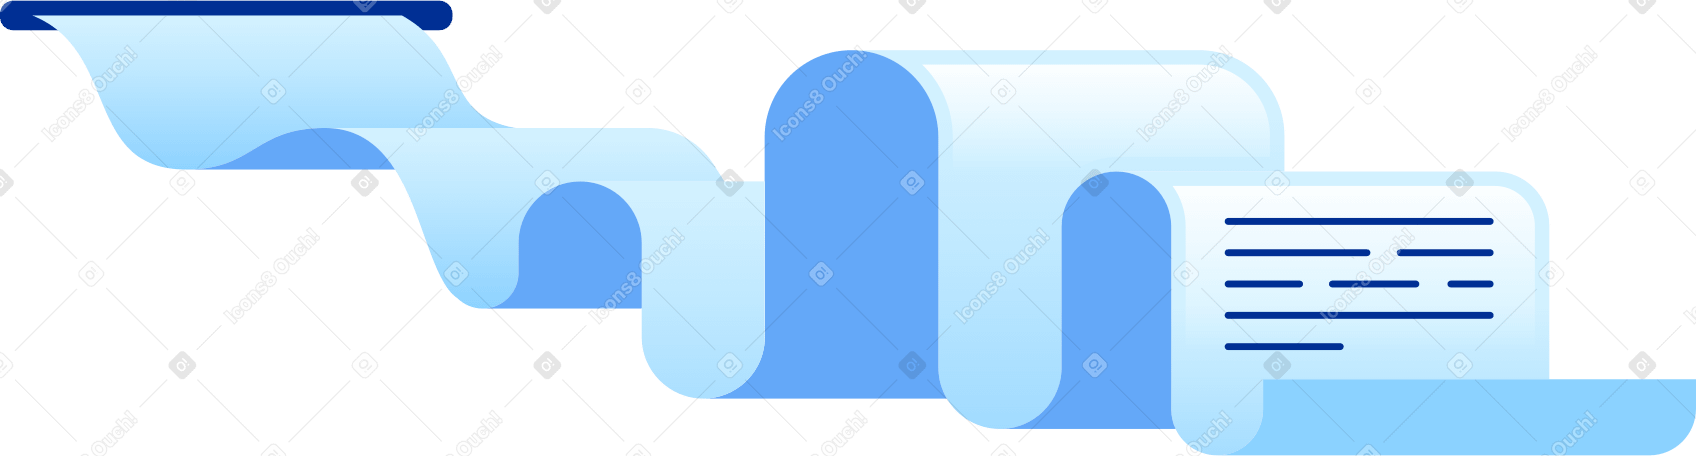 long paper scroll Illustration in PNG, SVG